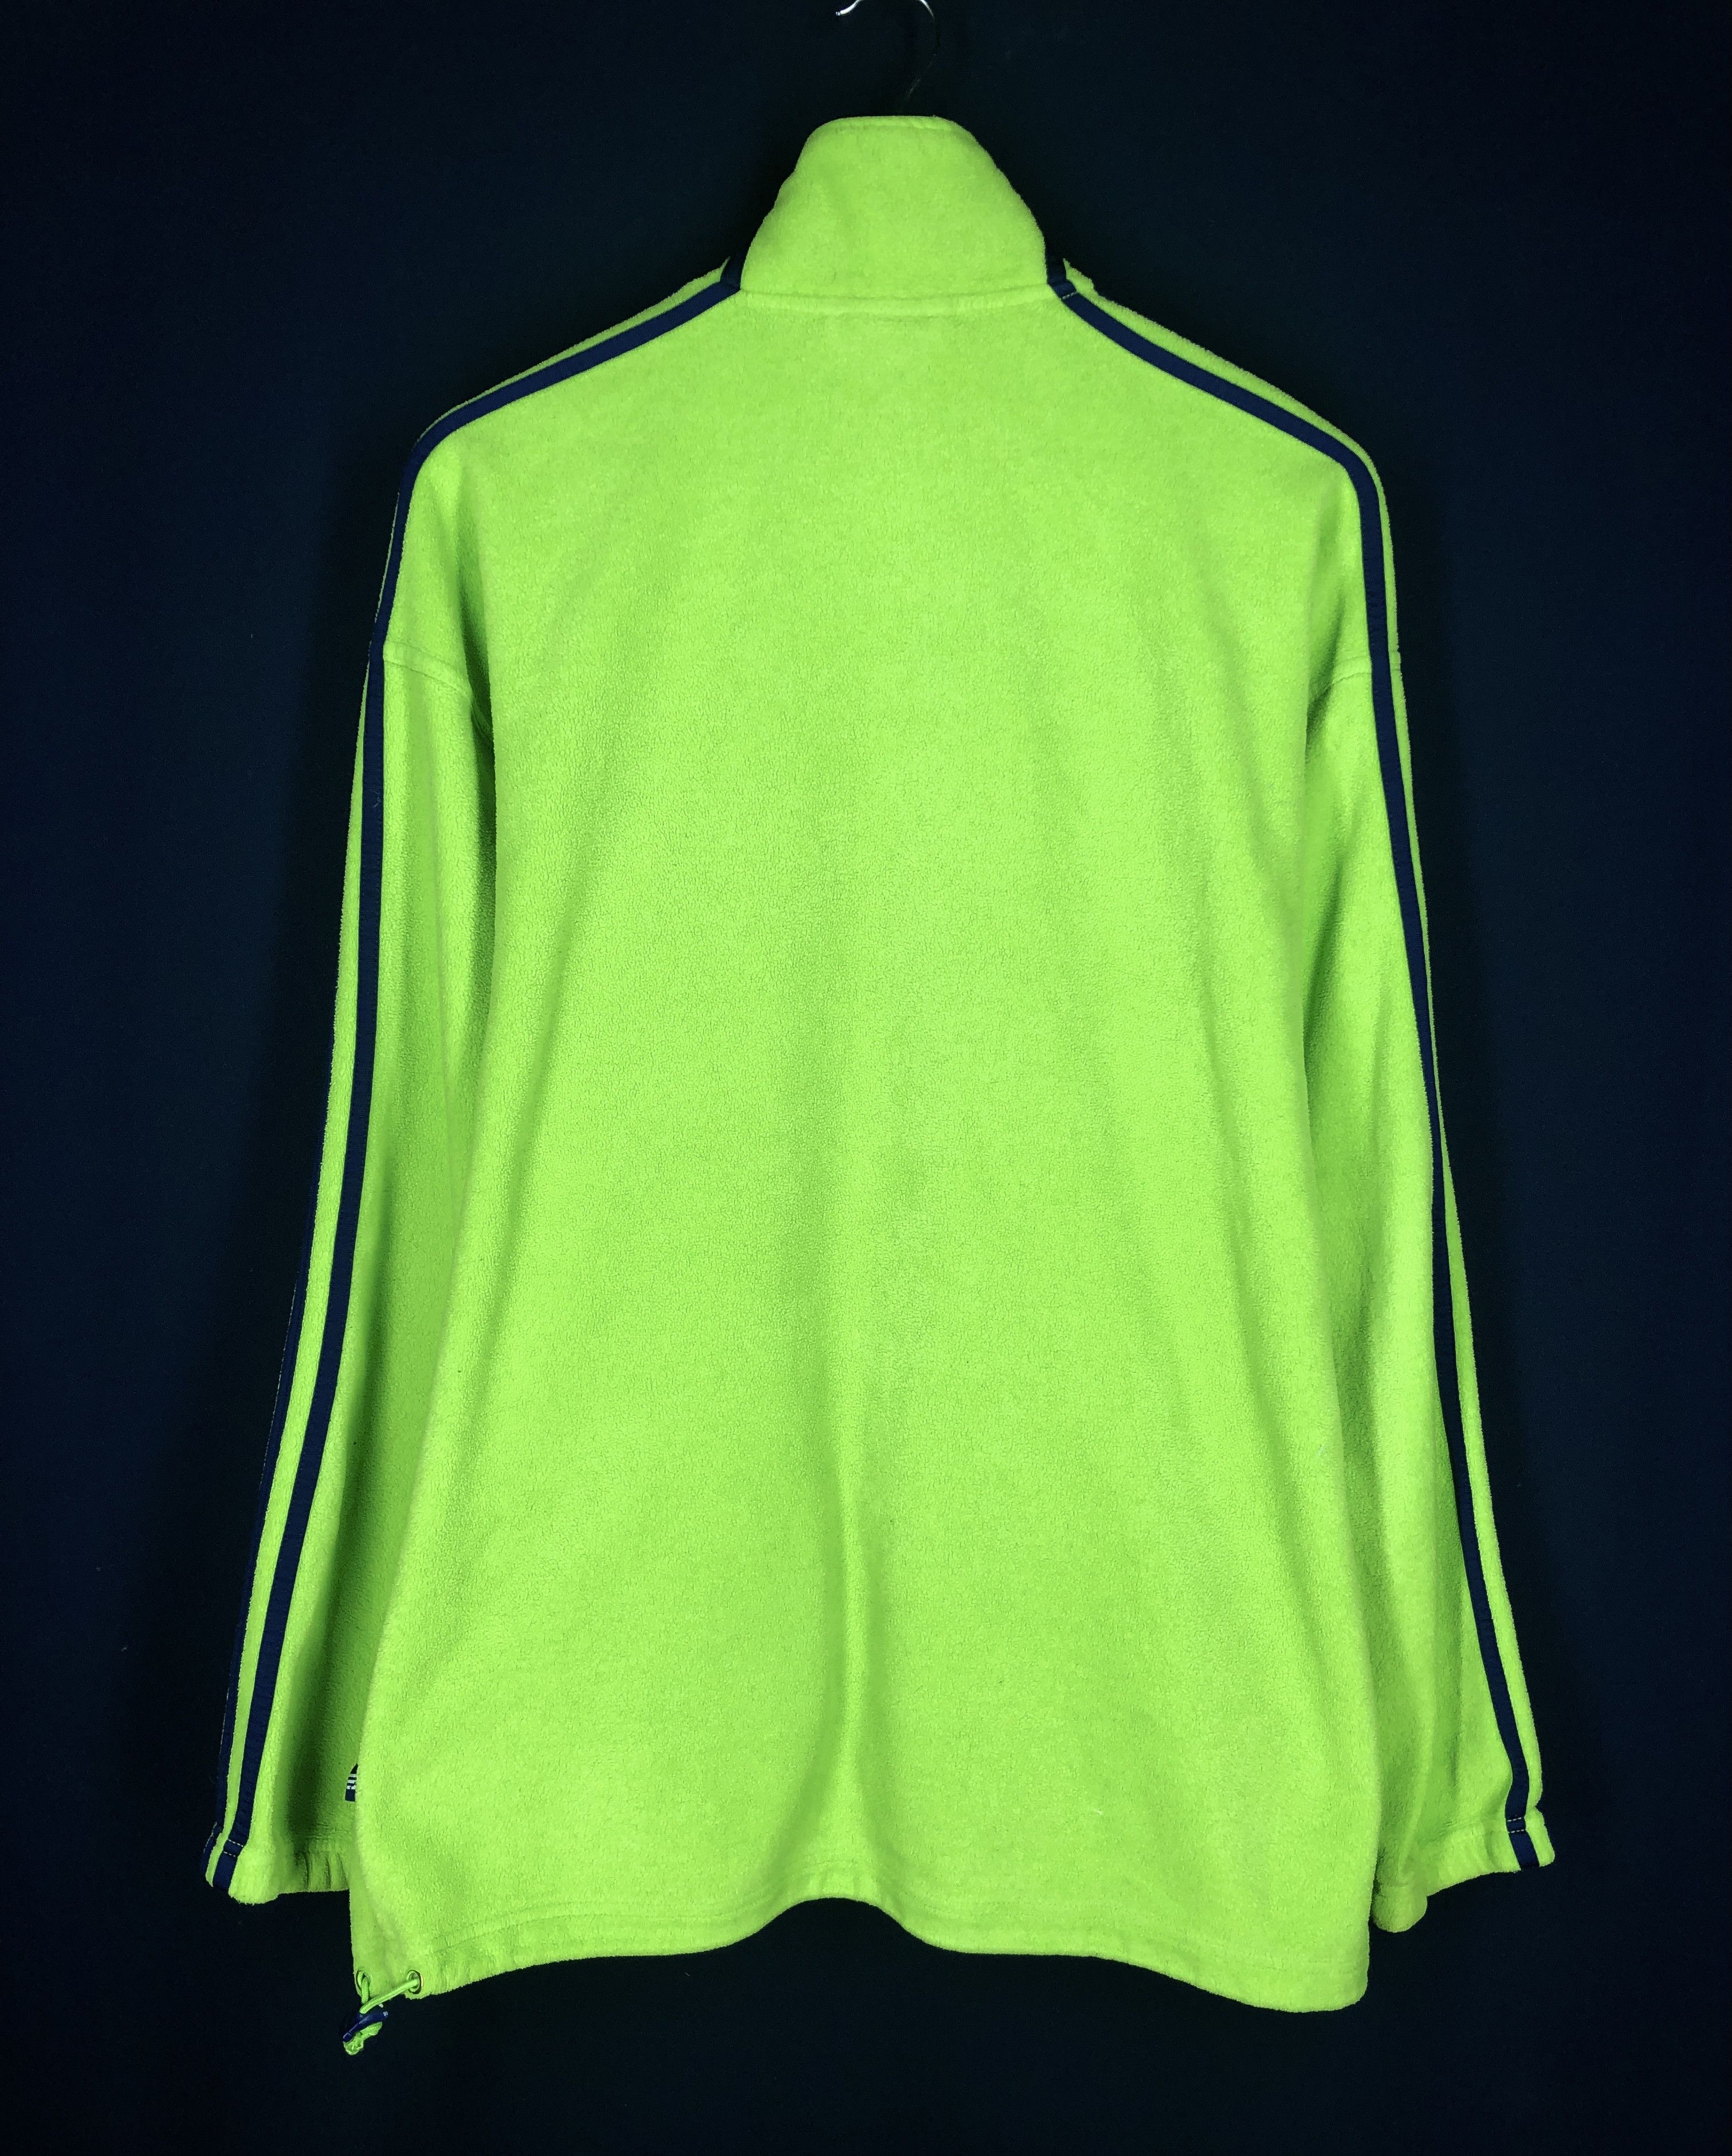 Adidas VTG Adidas Mint-Green Fleece Oversized Jumper Jacket Coat Size US L / EU 52-54 / 3 - 2 Preview